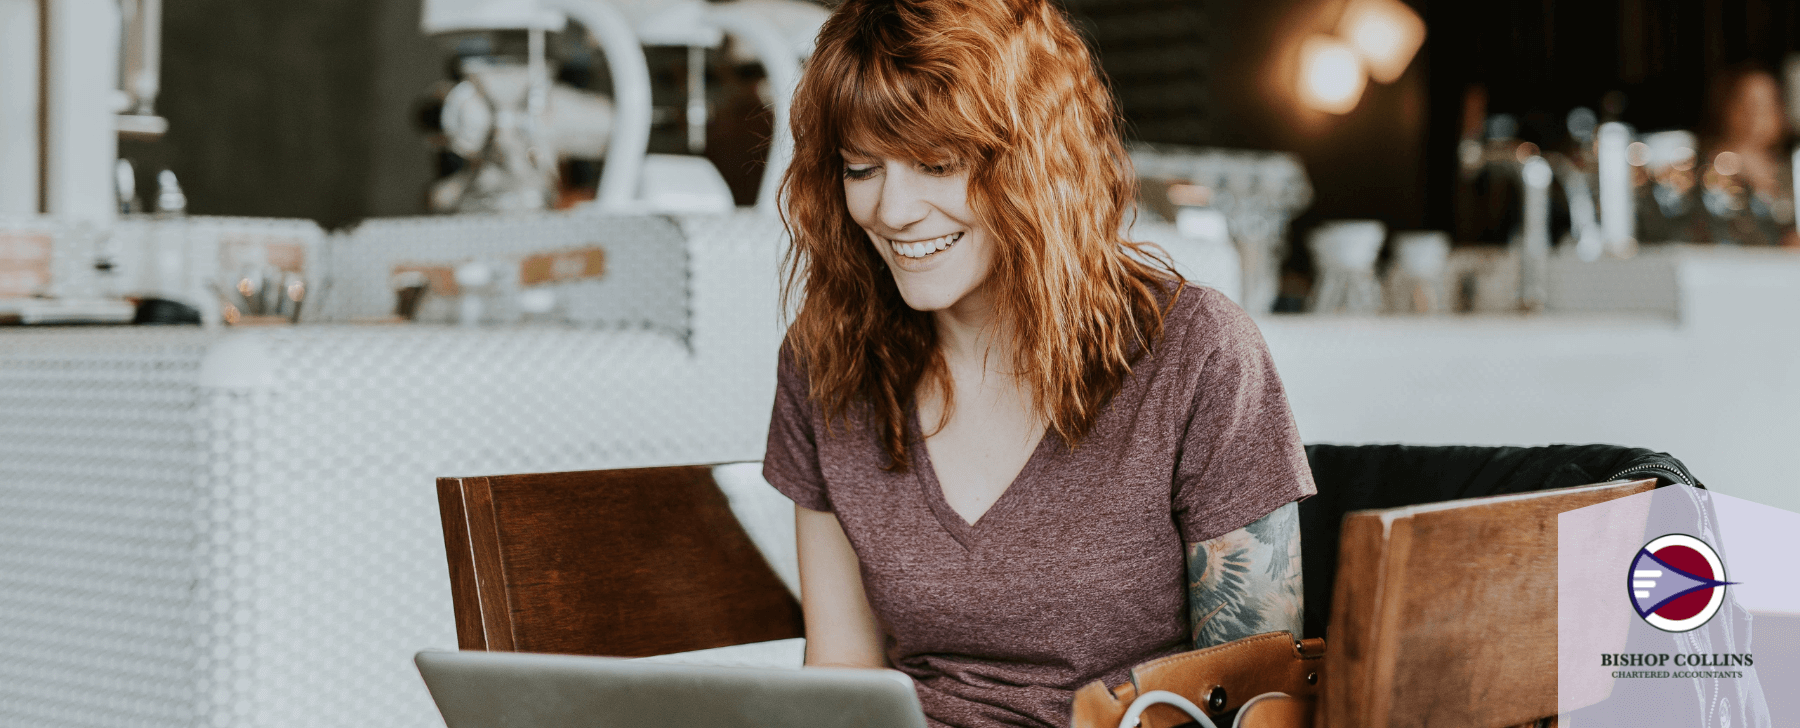 happy woman checking laptop